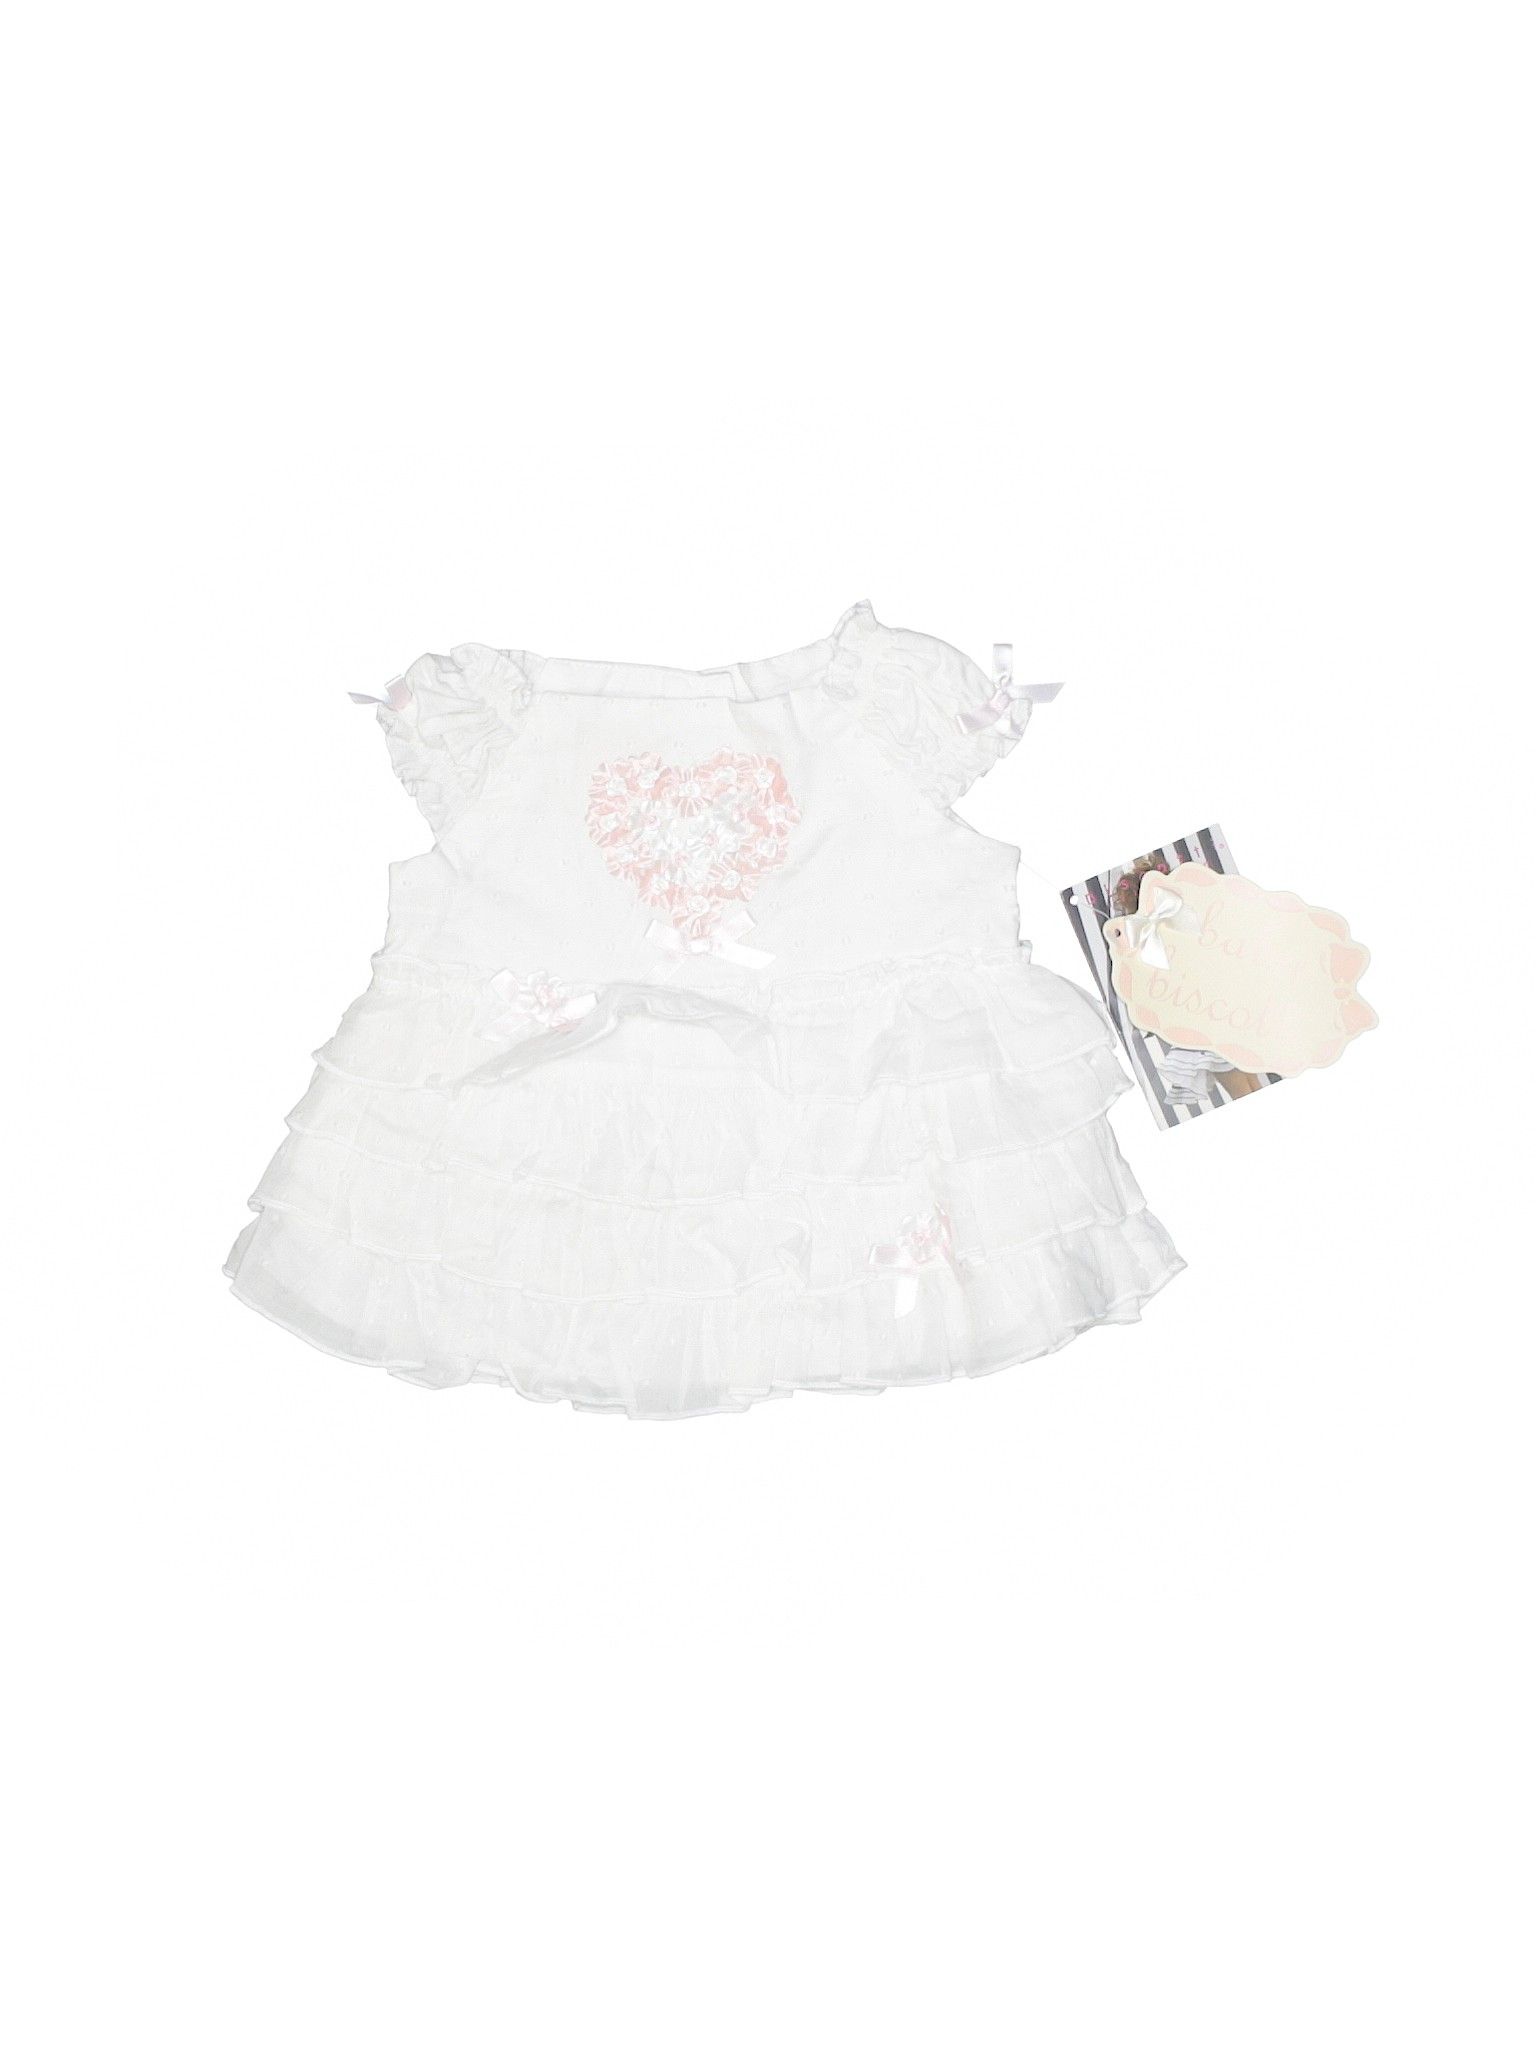 Baby Biscotti Dress Size 0 mo: White Girls Skirts & Dresses - 37022675 | thredUP